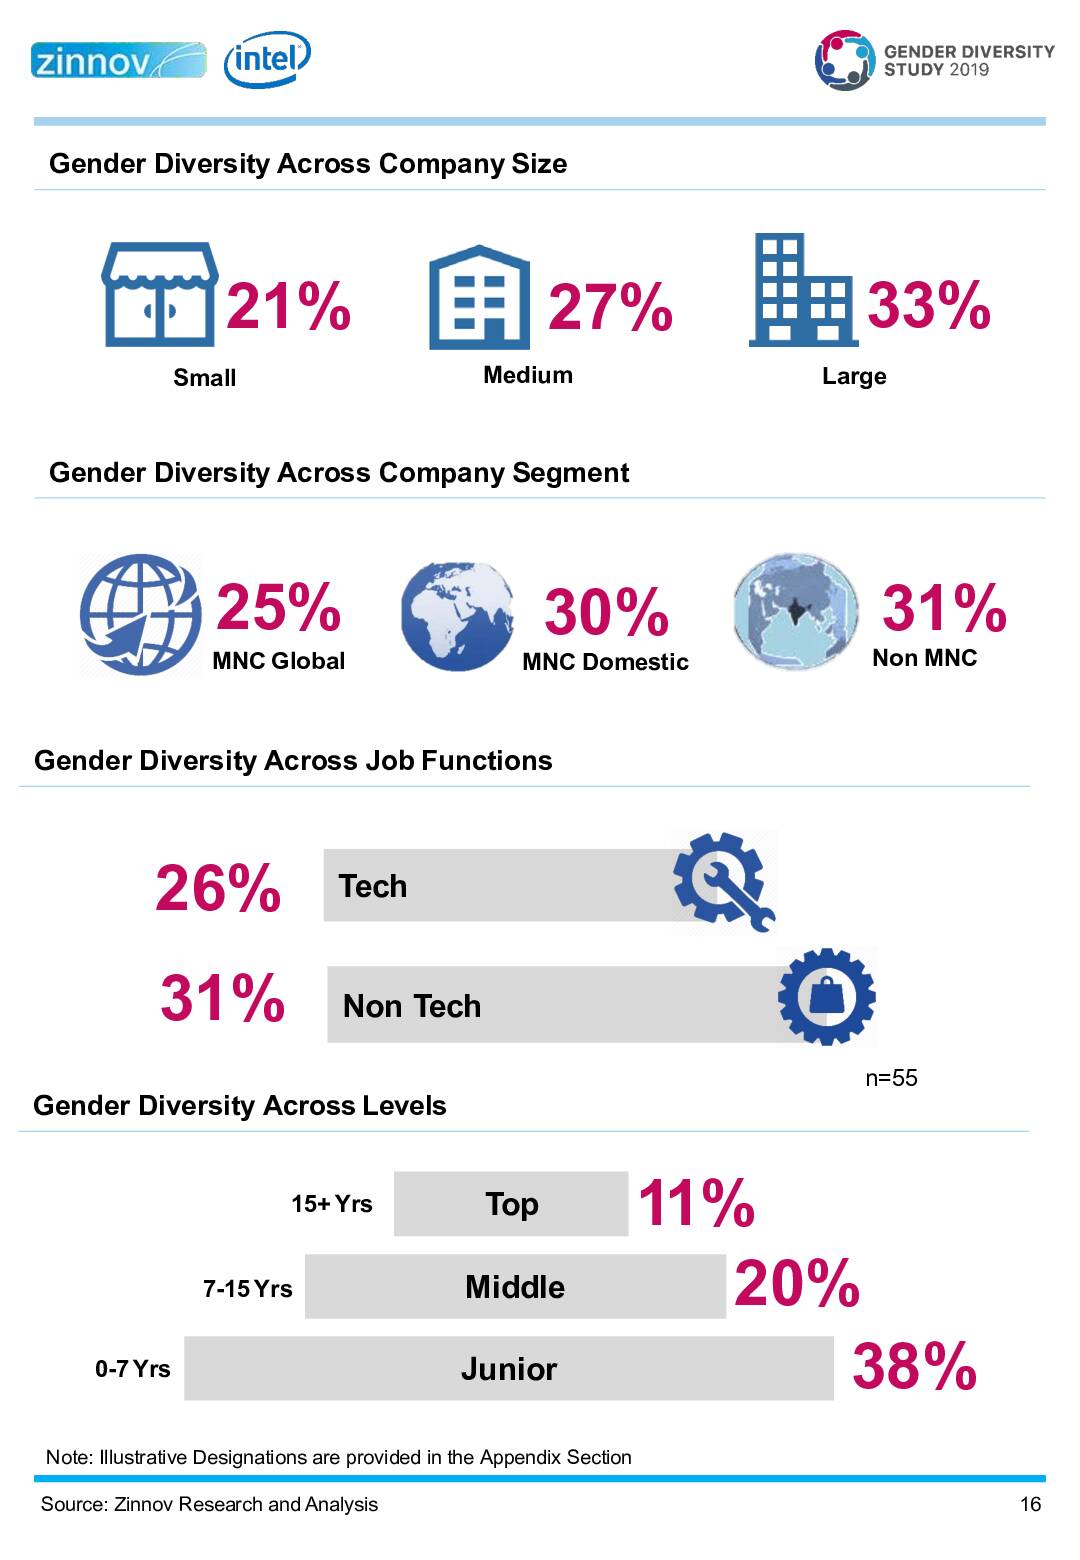 Zinnov Intel Gender Diversity Benchmark Study 201916